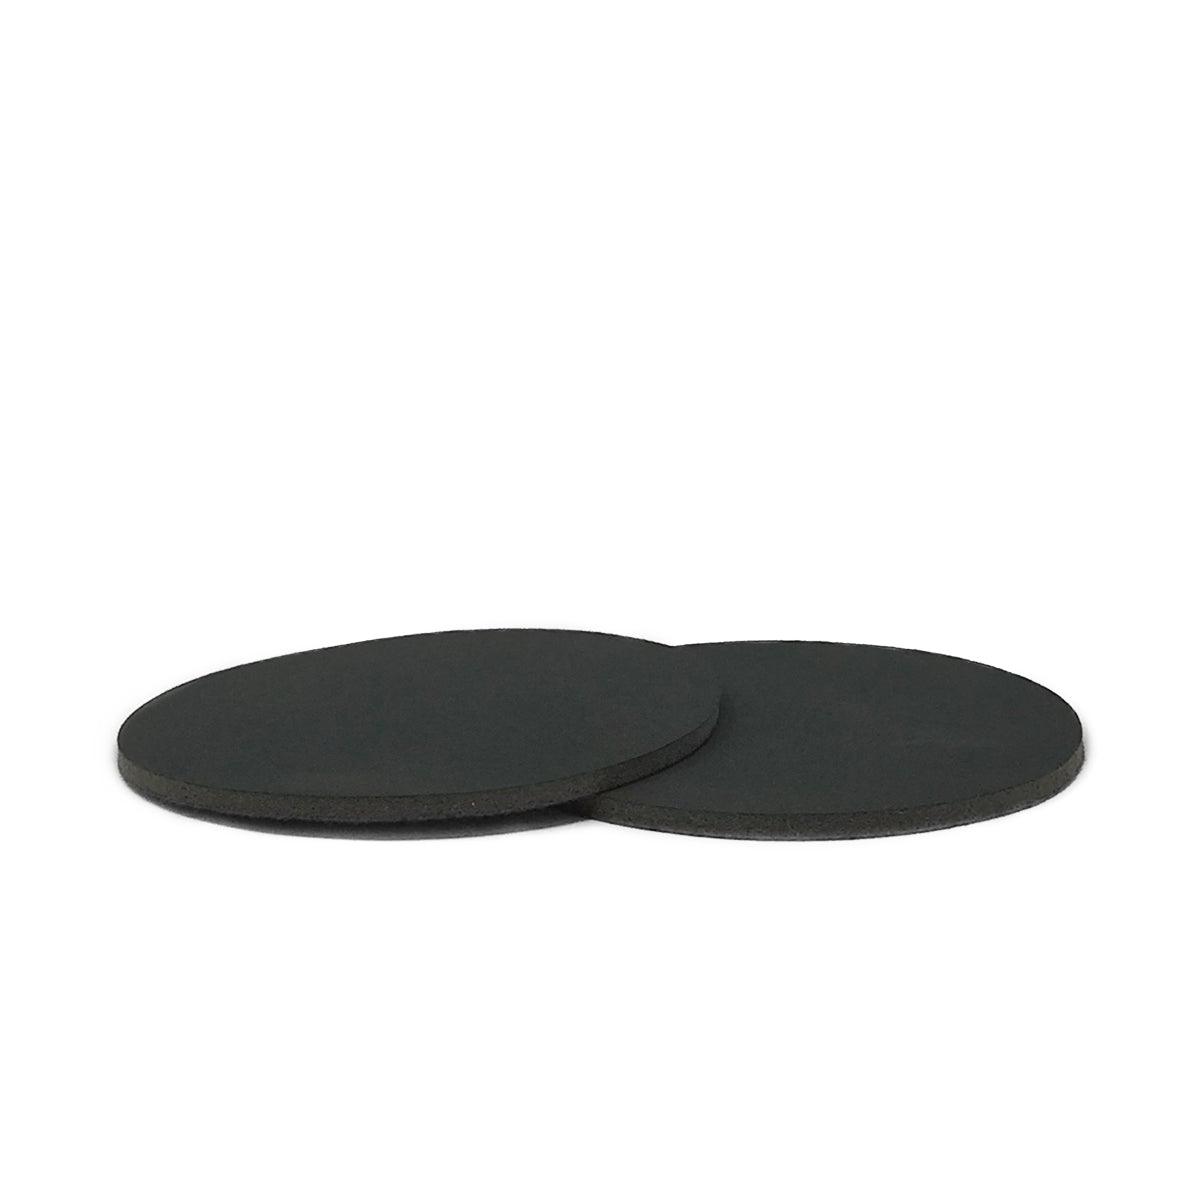 Sea-Shield 4000 Grit 6 inch Sanding Disc, Pkg/10